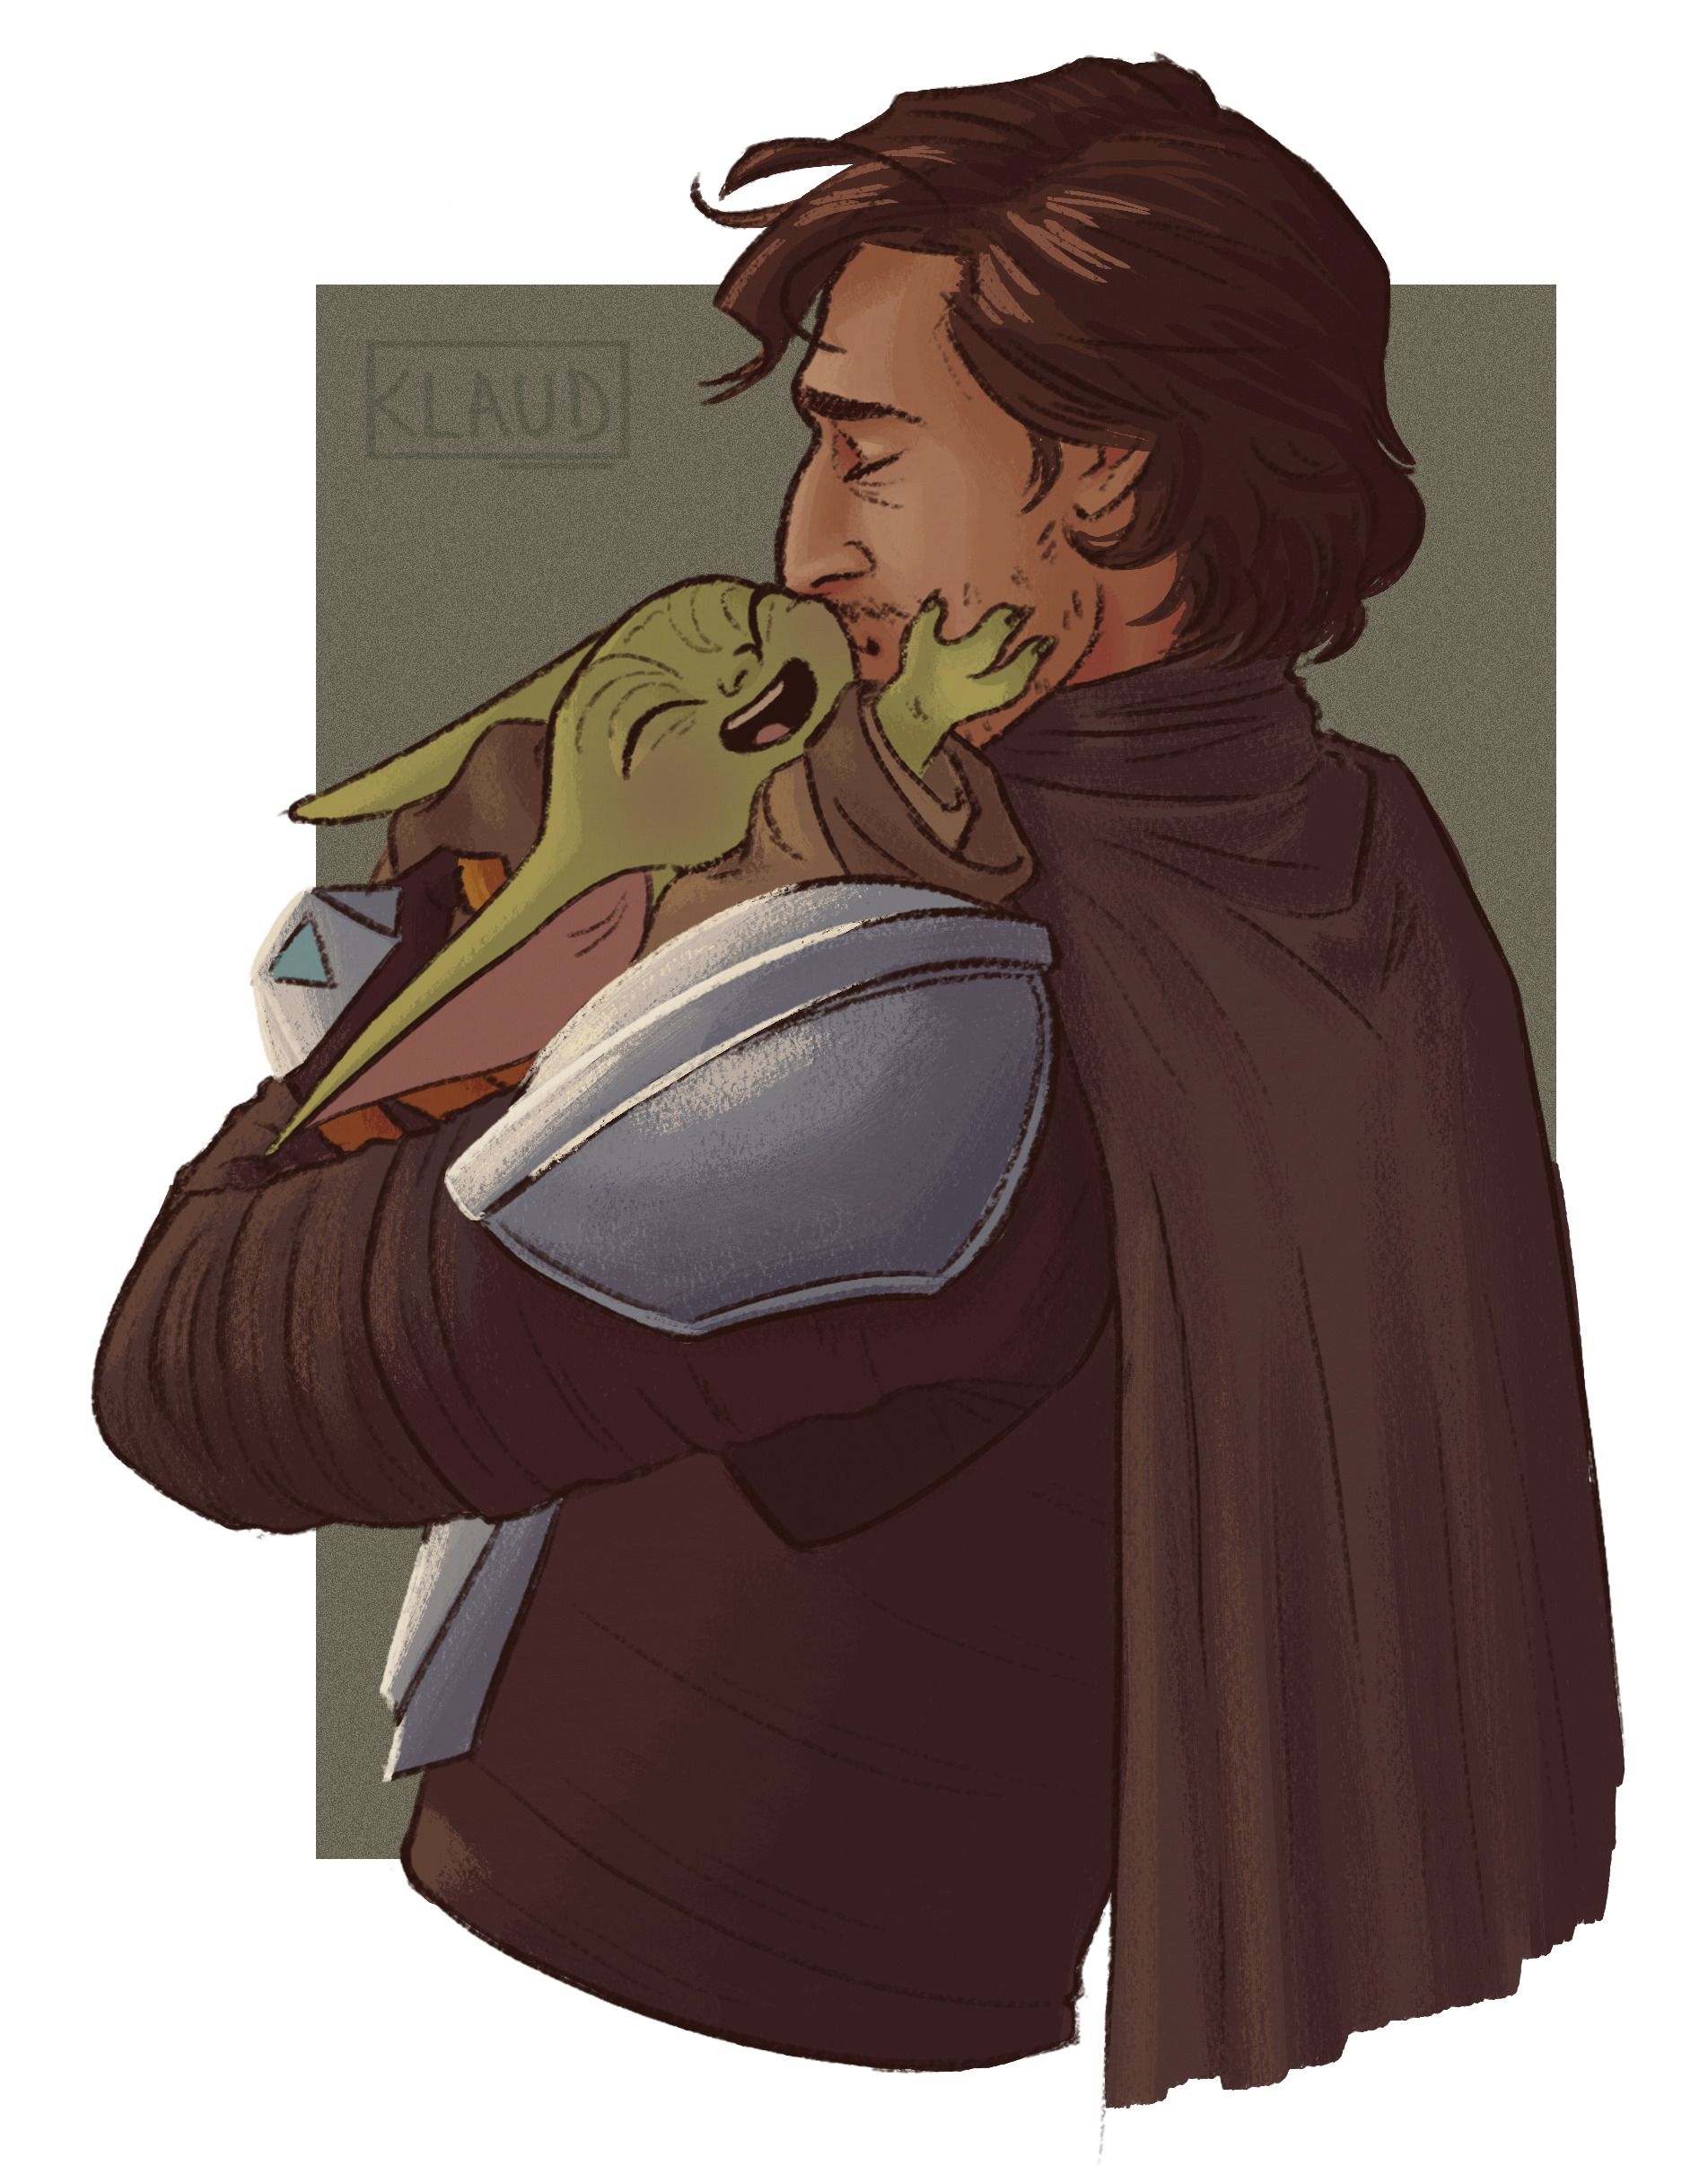 Baby Yoda and Mandalorian Fanart by klaudiart